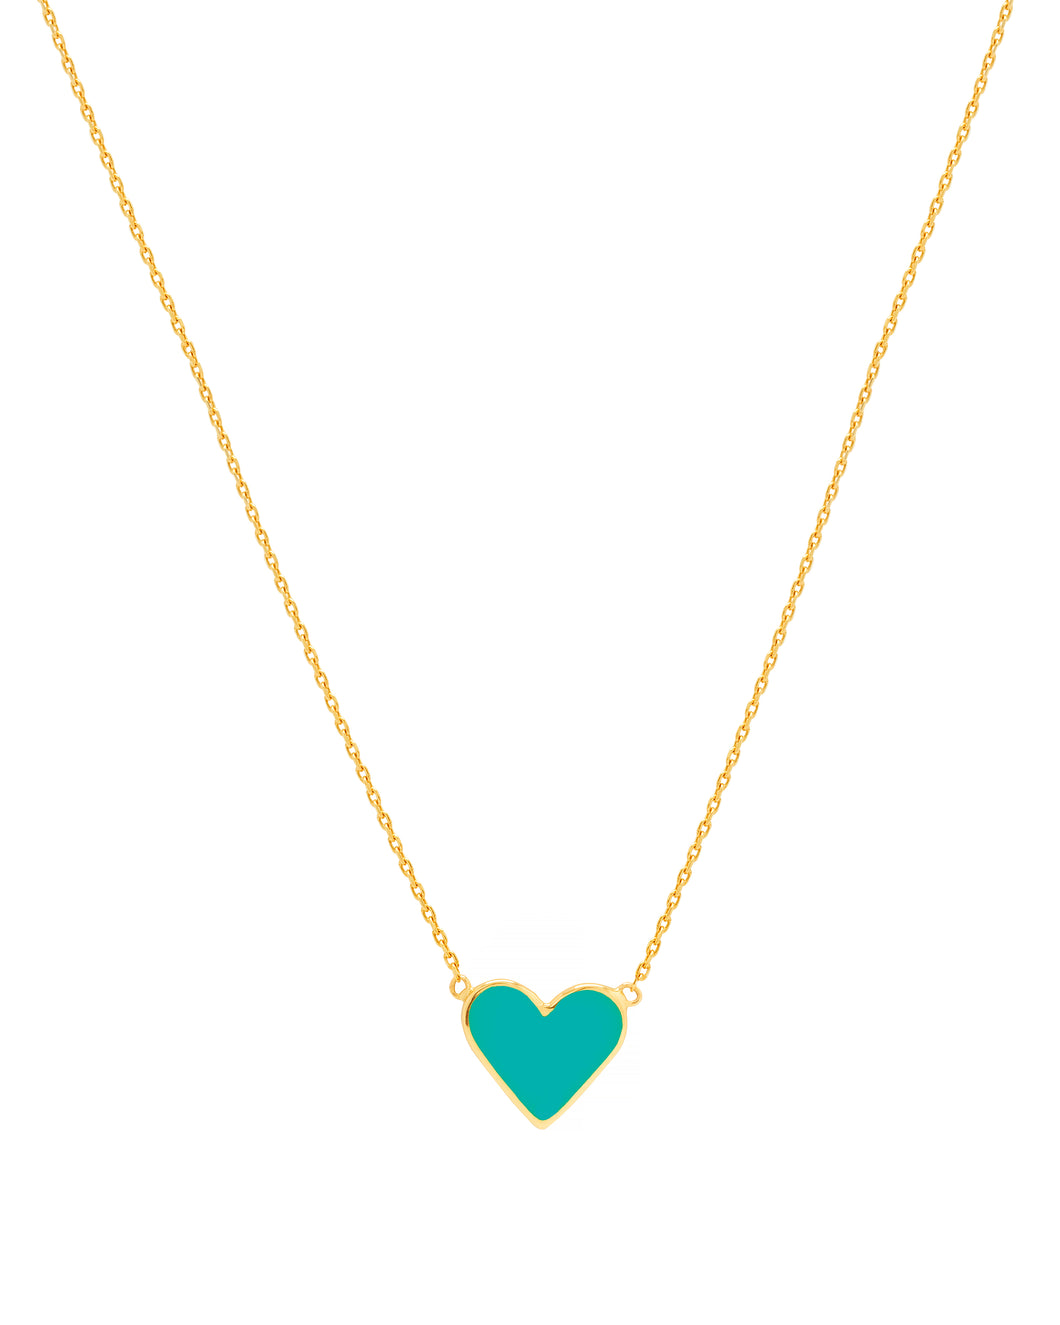 LRJC Enameled Heart Necklace 18K Gold - Aqua